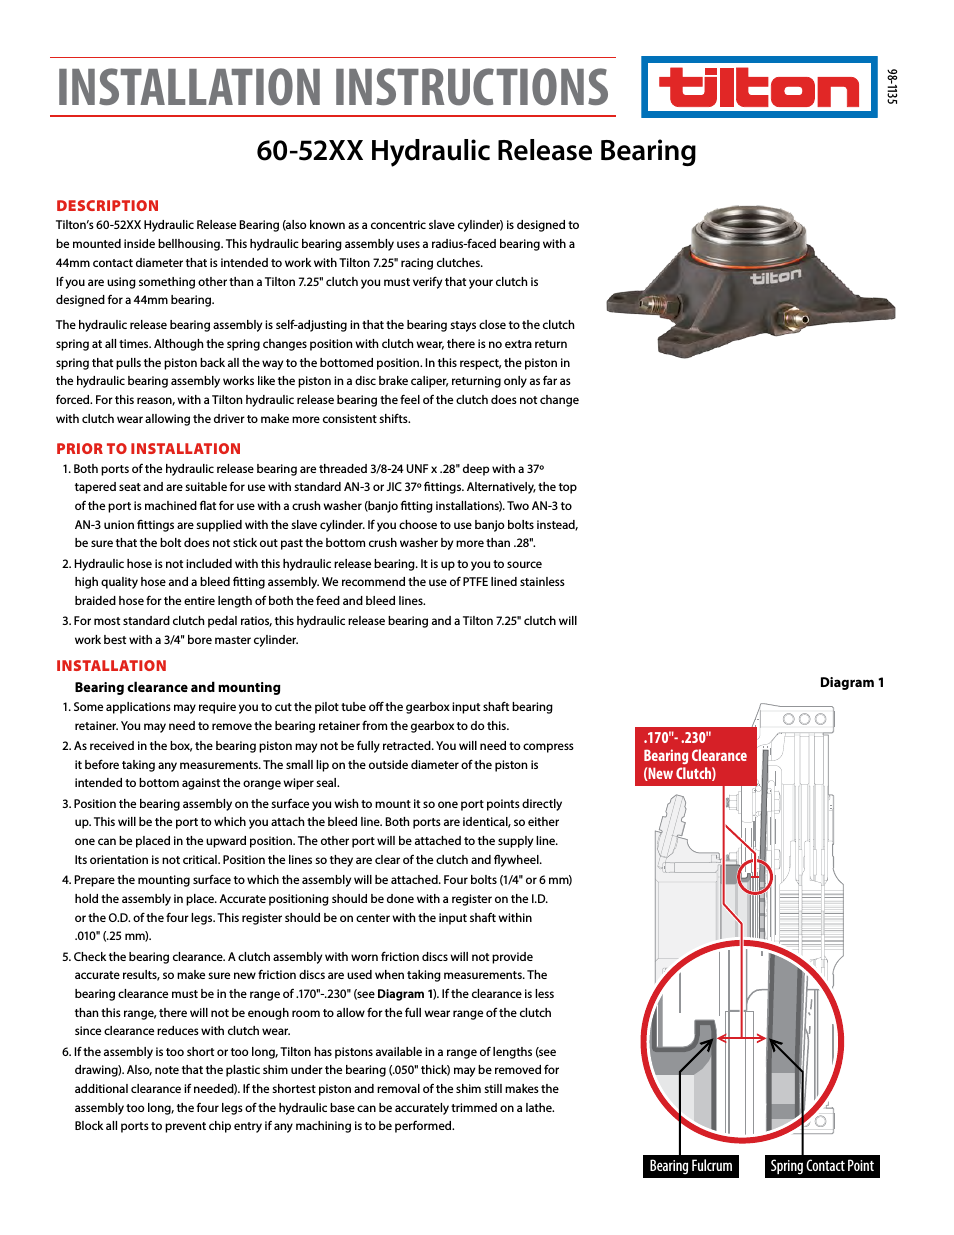 52XX Hydraulic Release Bearing (98-1135)